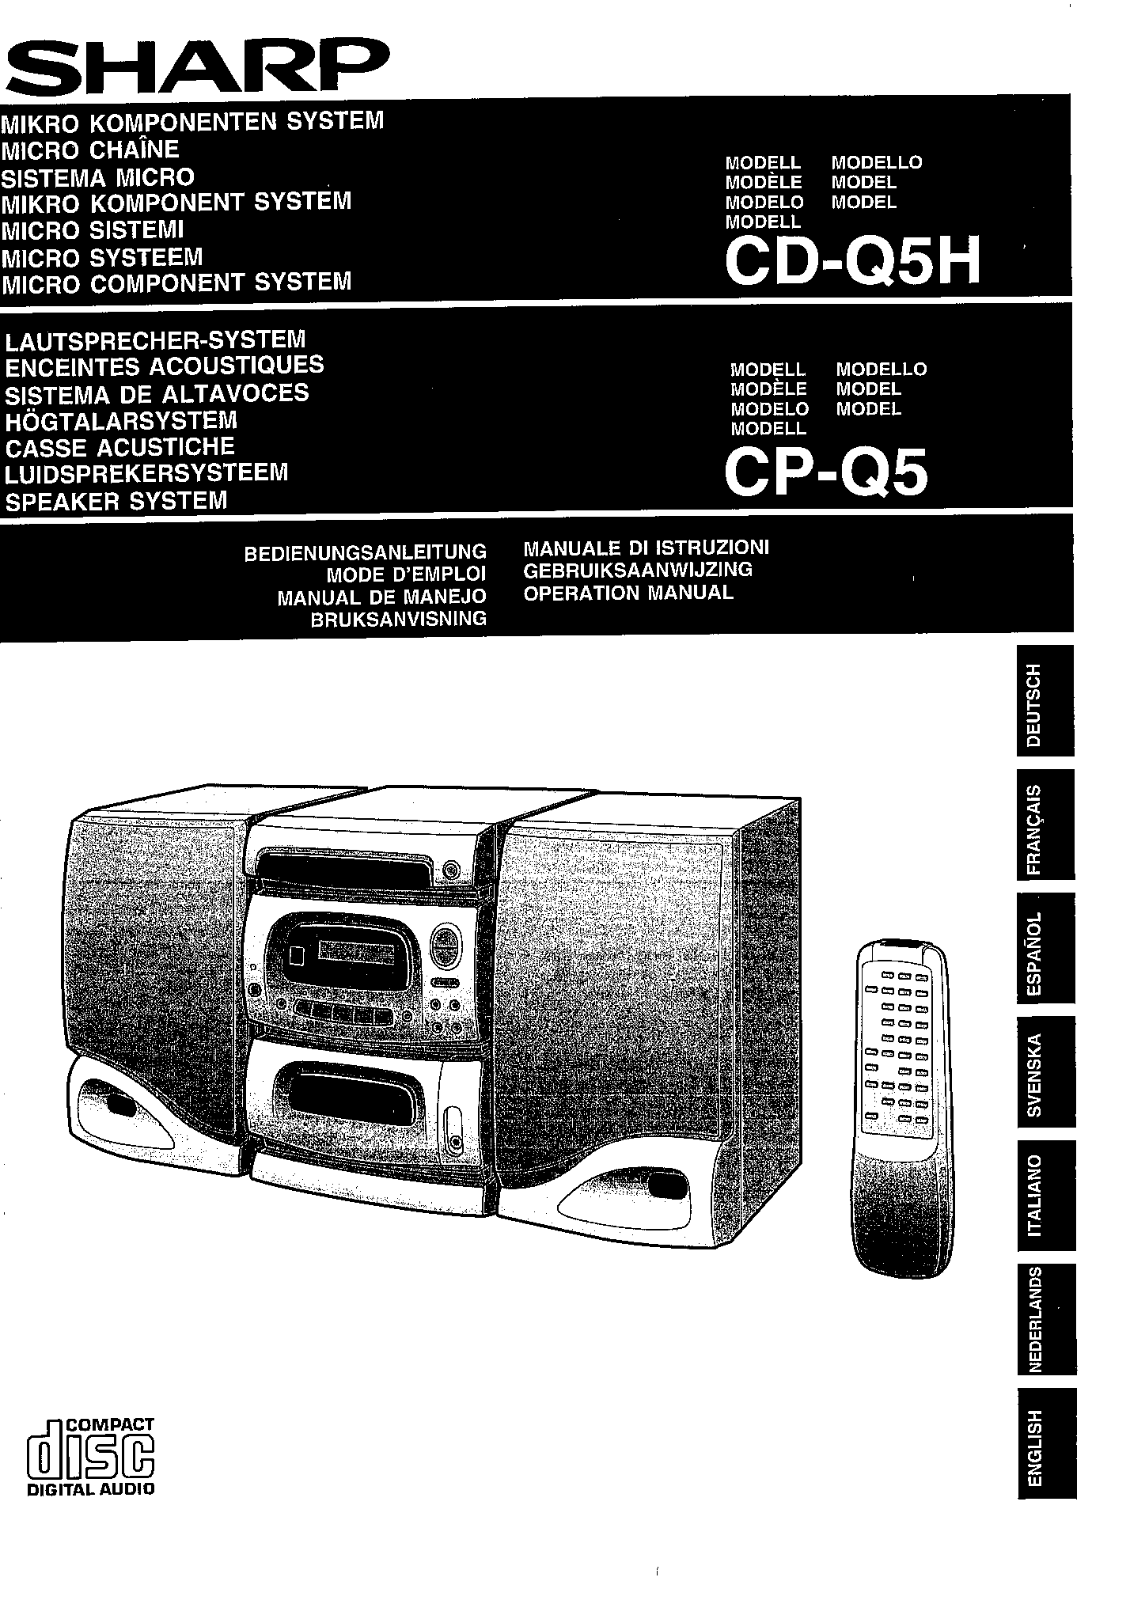 Sharp CD-Q5, CD-Q5H, CP-Q5, CP-Q5H Manual